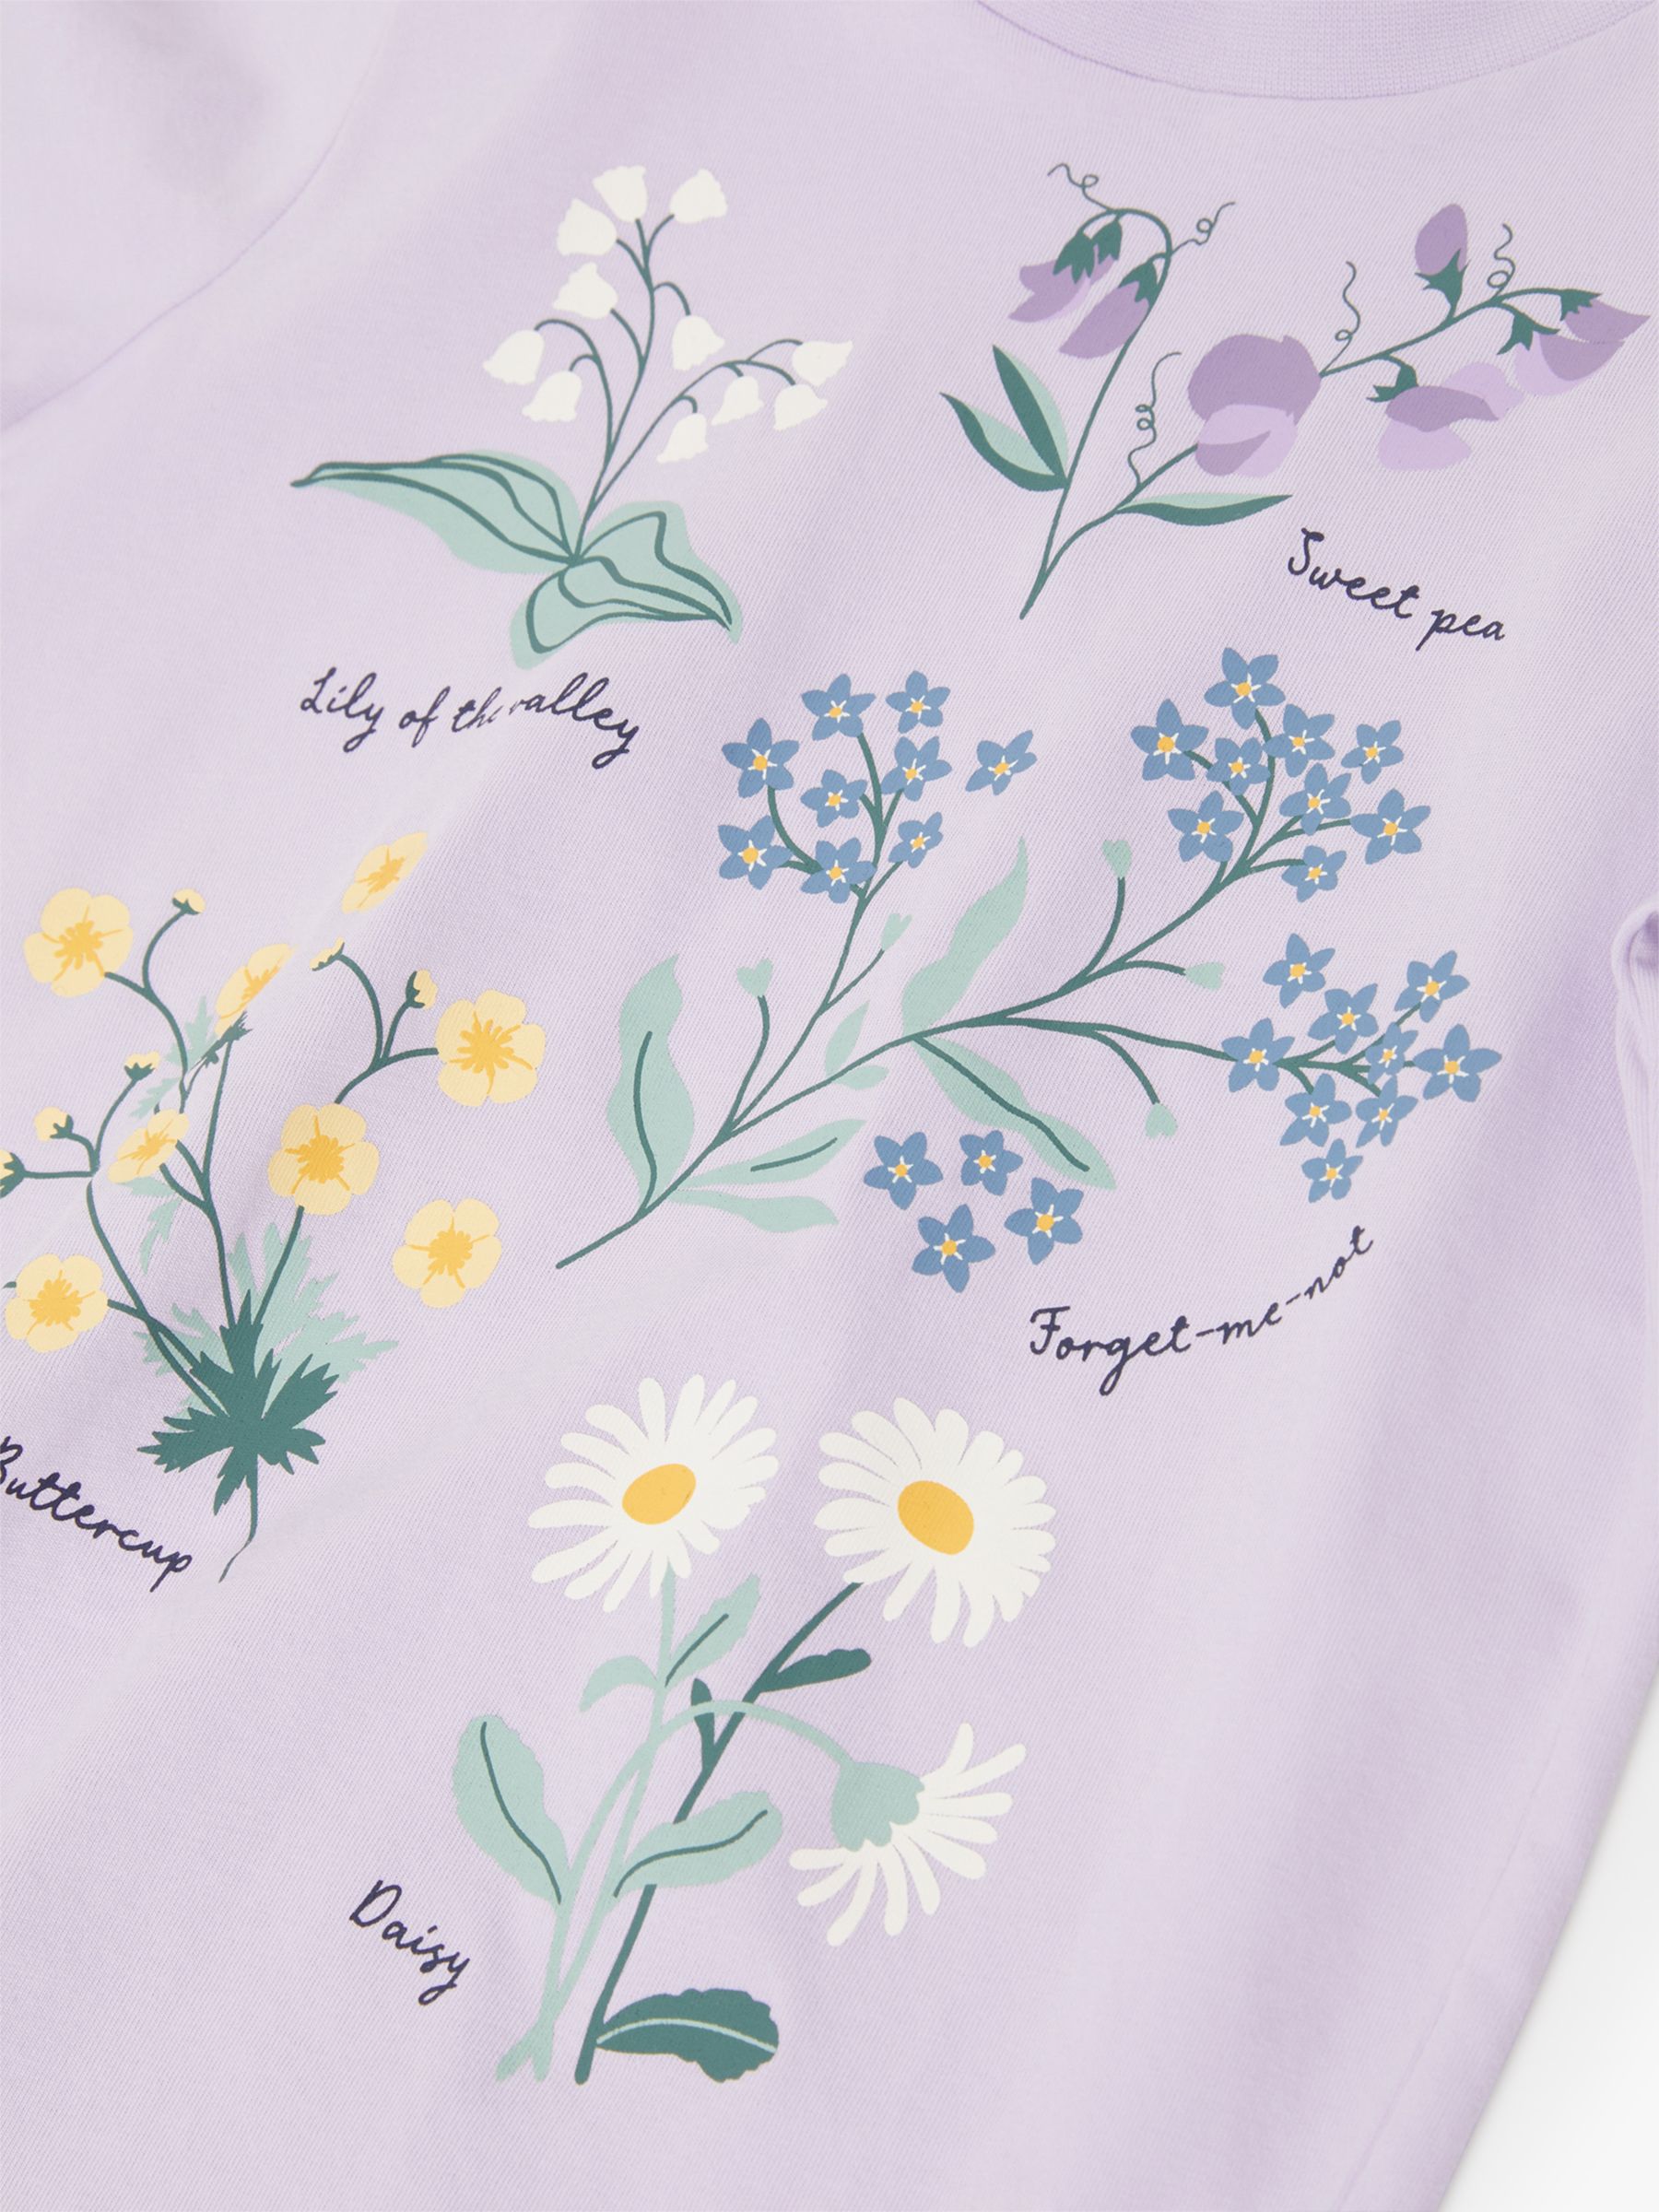 Polarn O. Pyret Kids' Organic Cotton Floral Print T-Shirt, Purple, 12-18 months